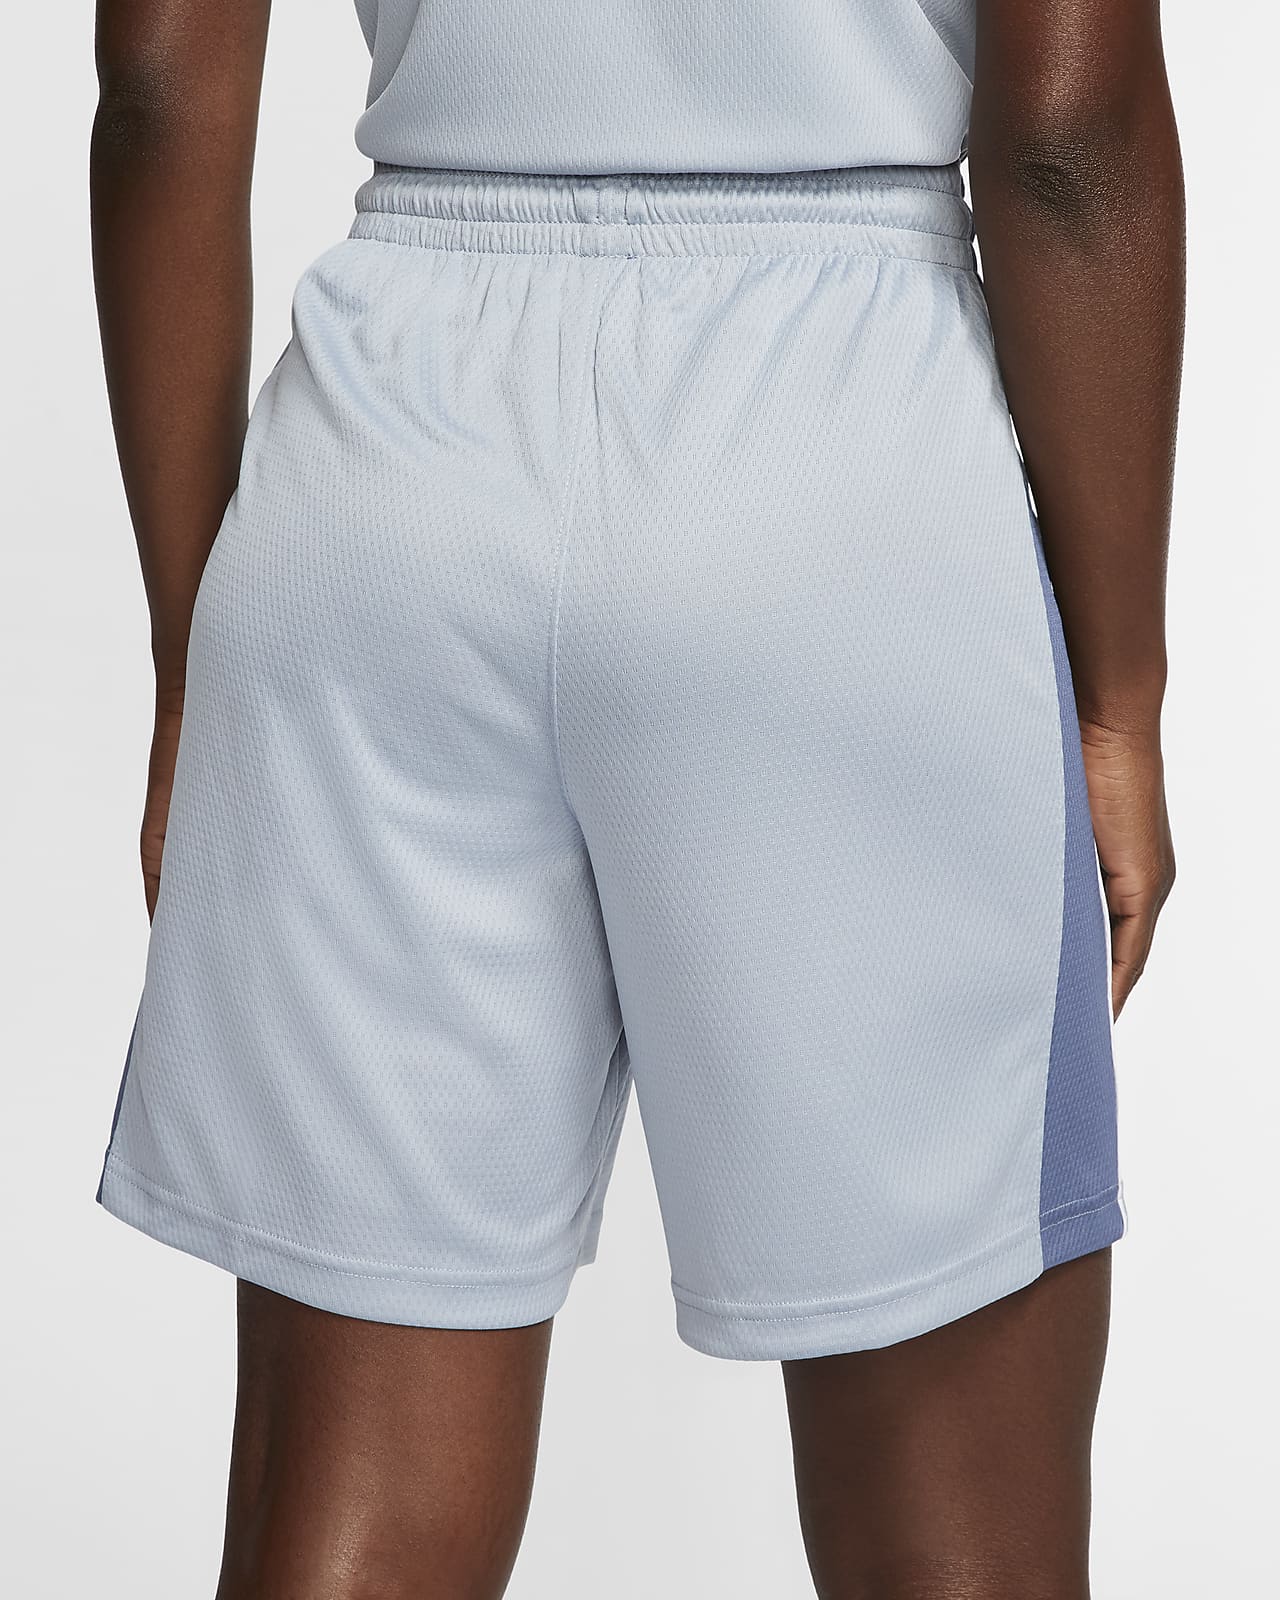 women's dri fit basketball shorts